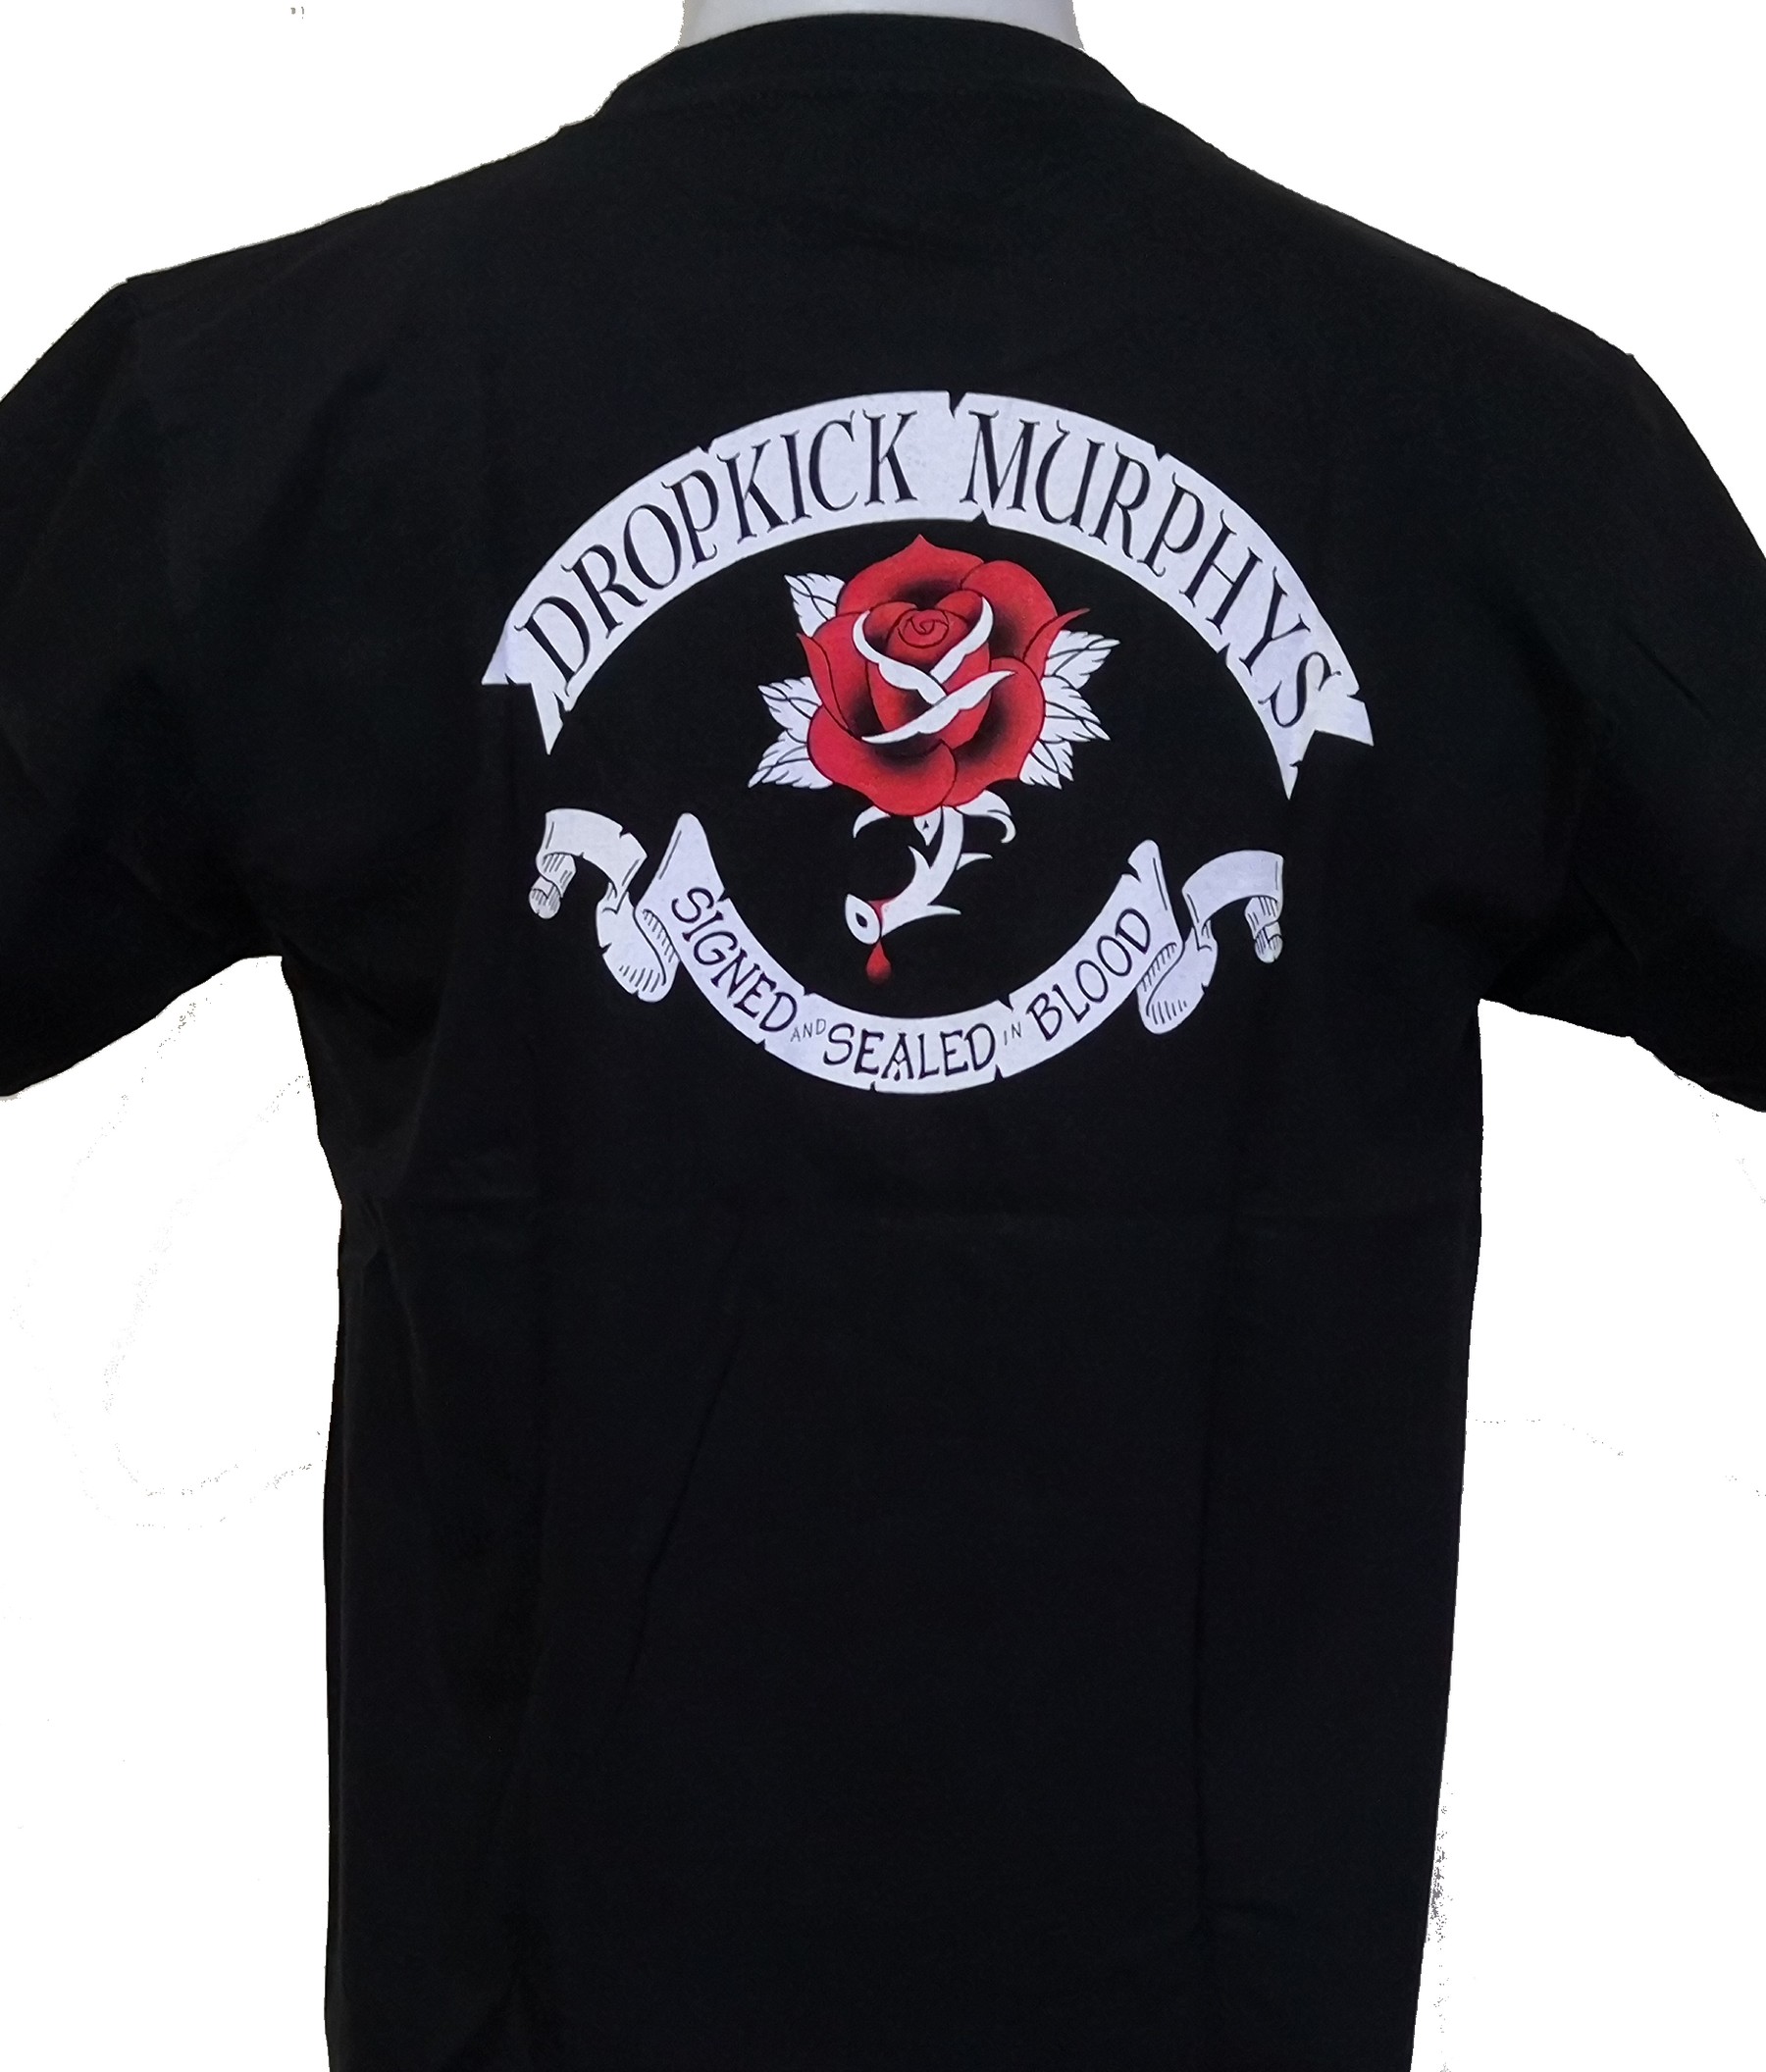 Signed & Saled Dropkick Murphys T-Shirt 